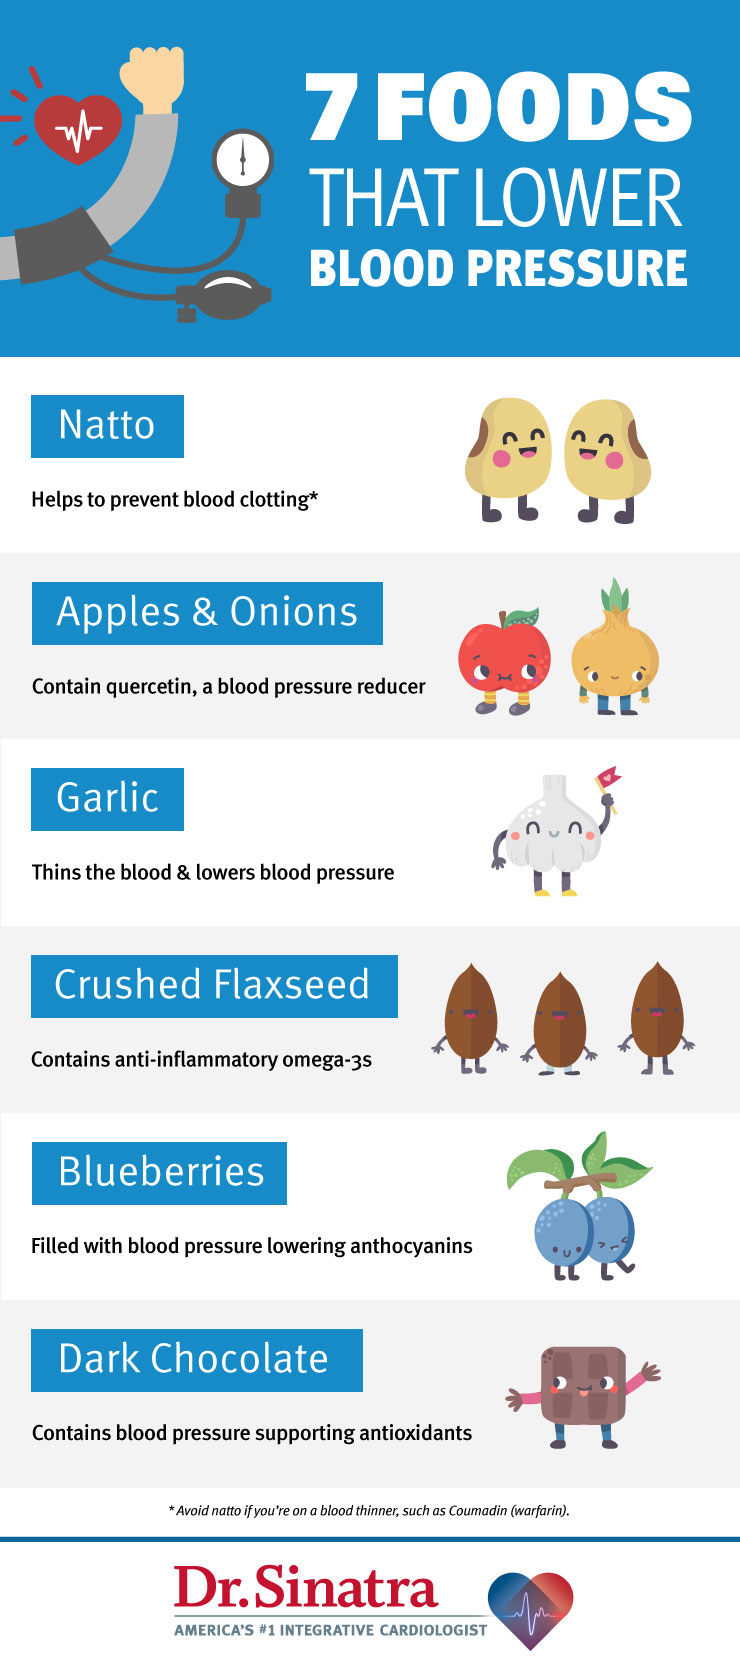 7 Food That Lower Blood Pressure